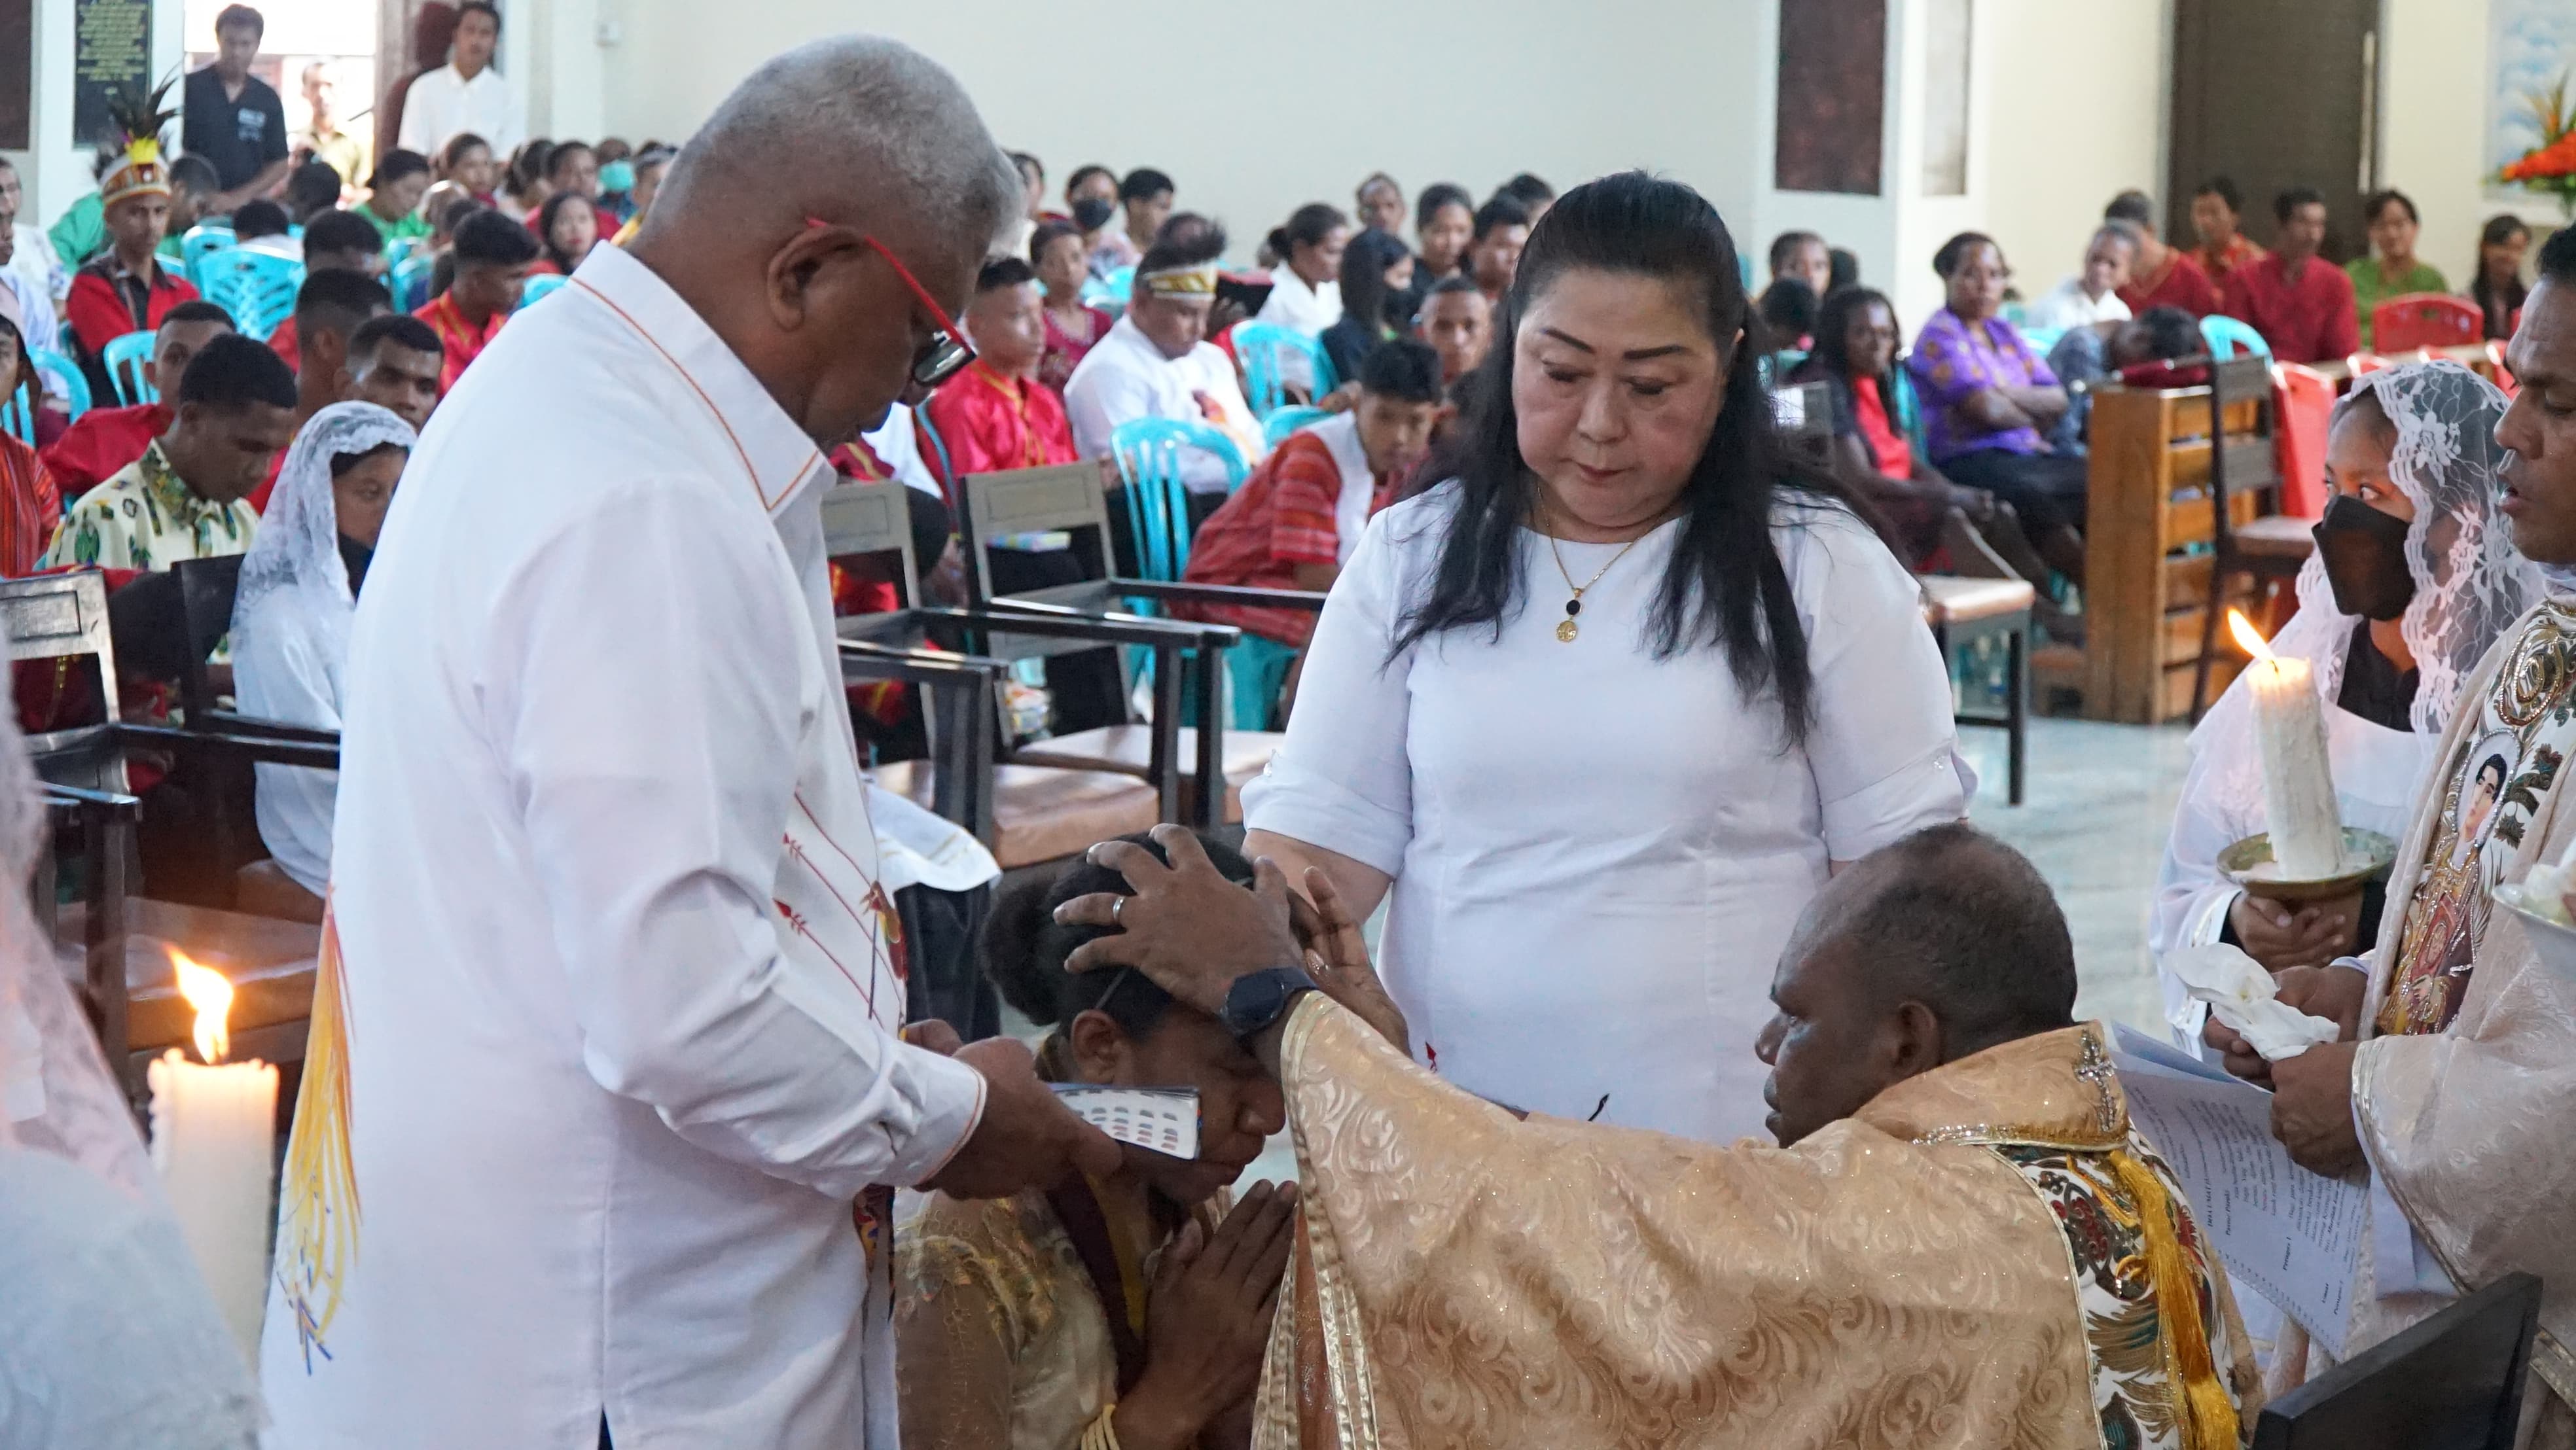 Administrator Diosesan Keuskupan Timika Terimakan Sakremen Krisma kepada 173 Umat, Johannes Rettob dan Istri jadi Wali Krismawan-Krismawati